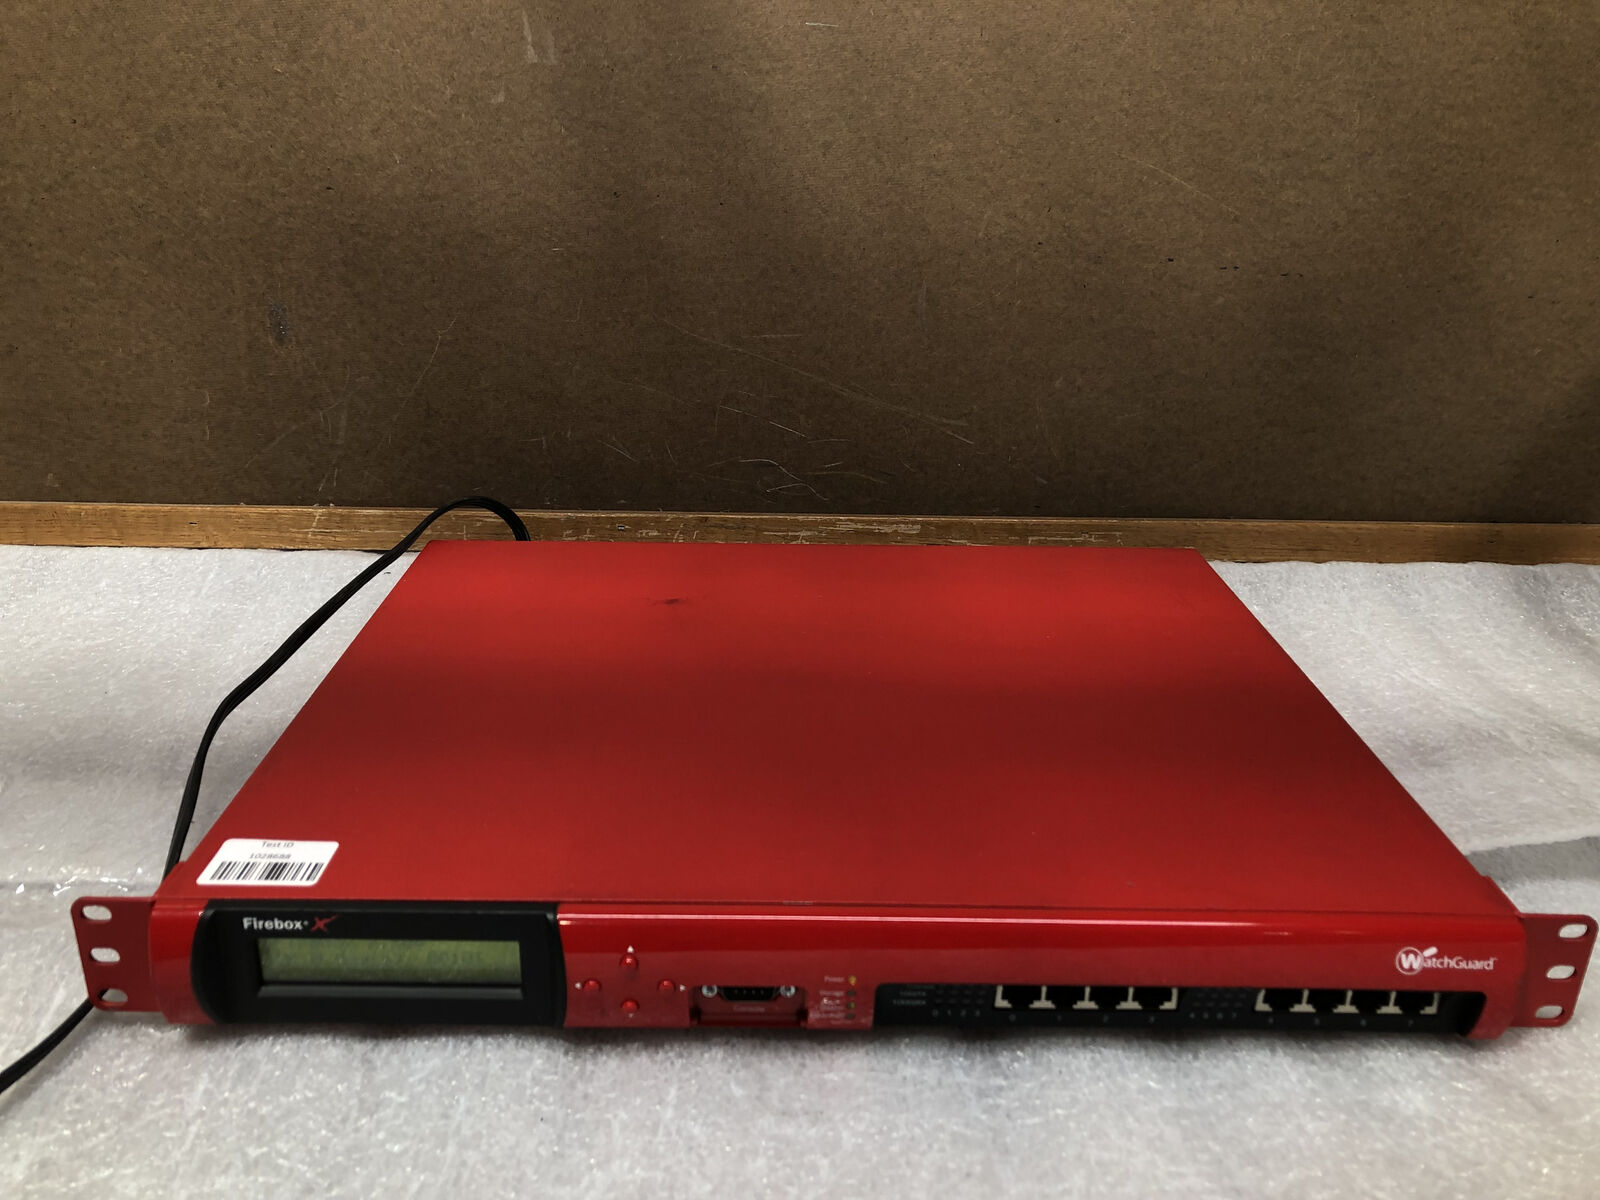 Watchguard X750e Core Firebox Security Appliance, NO PWR CORD -TESTED/RESET